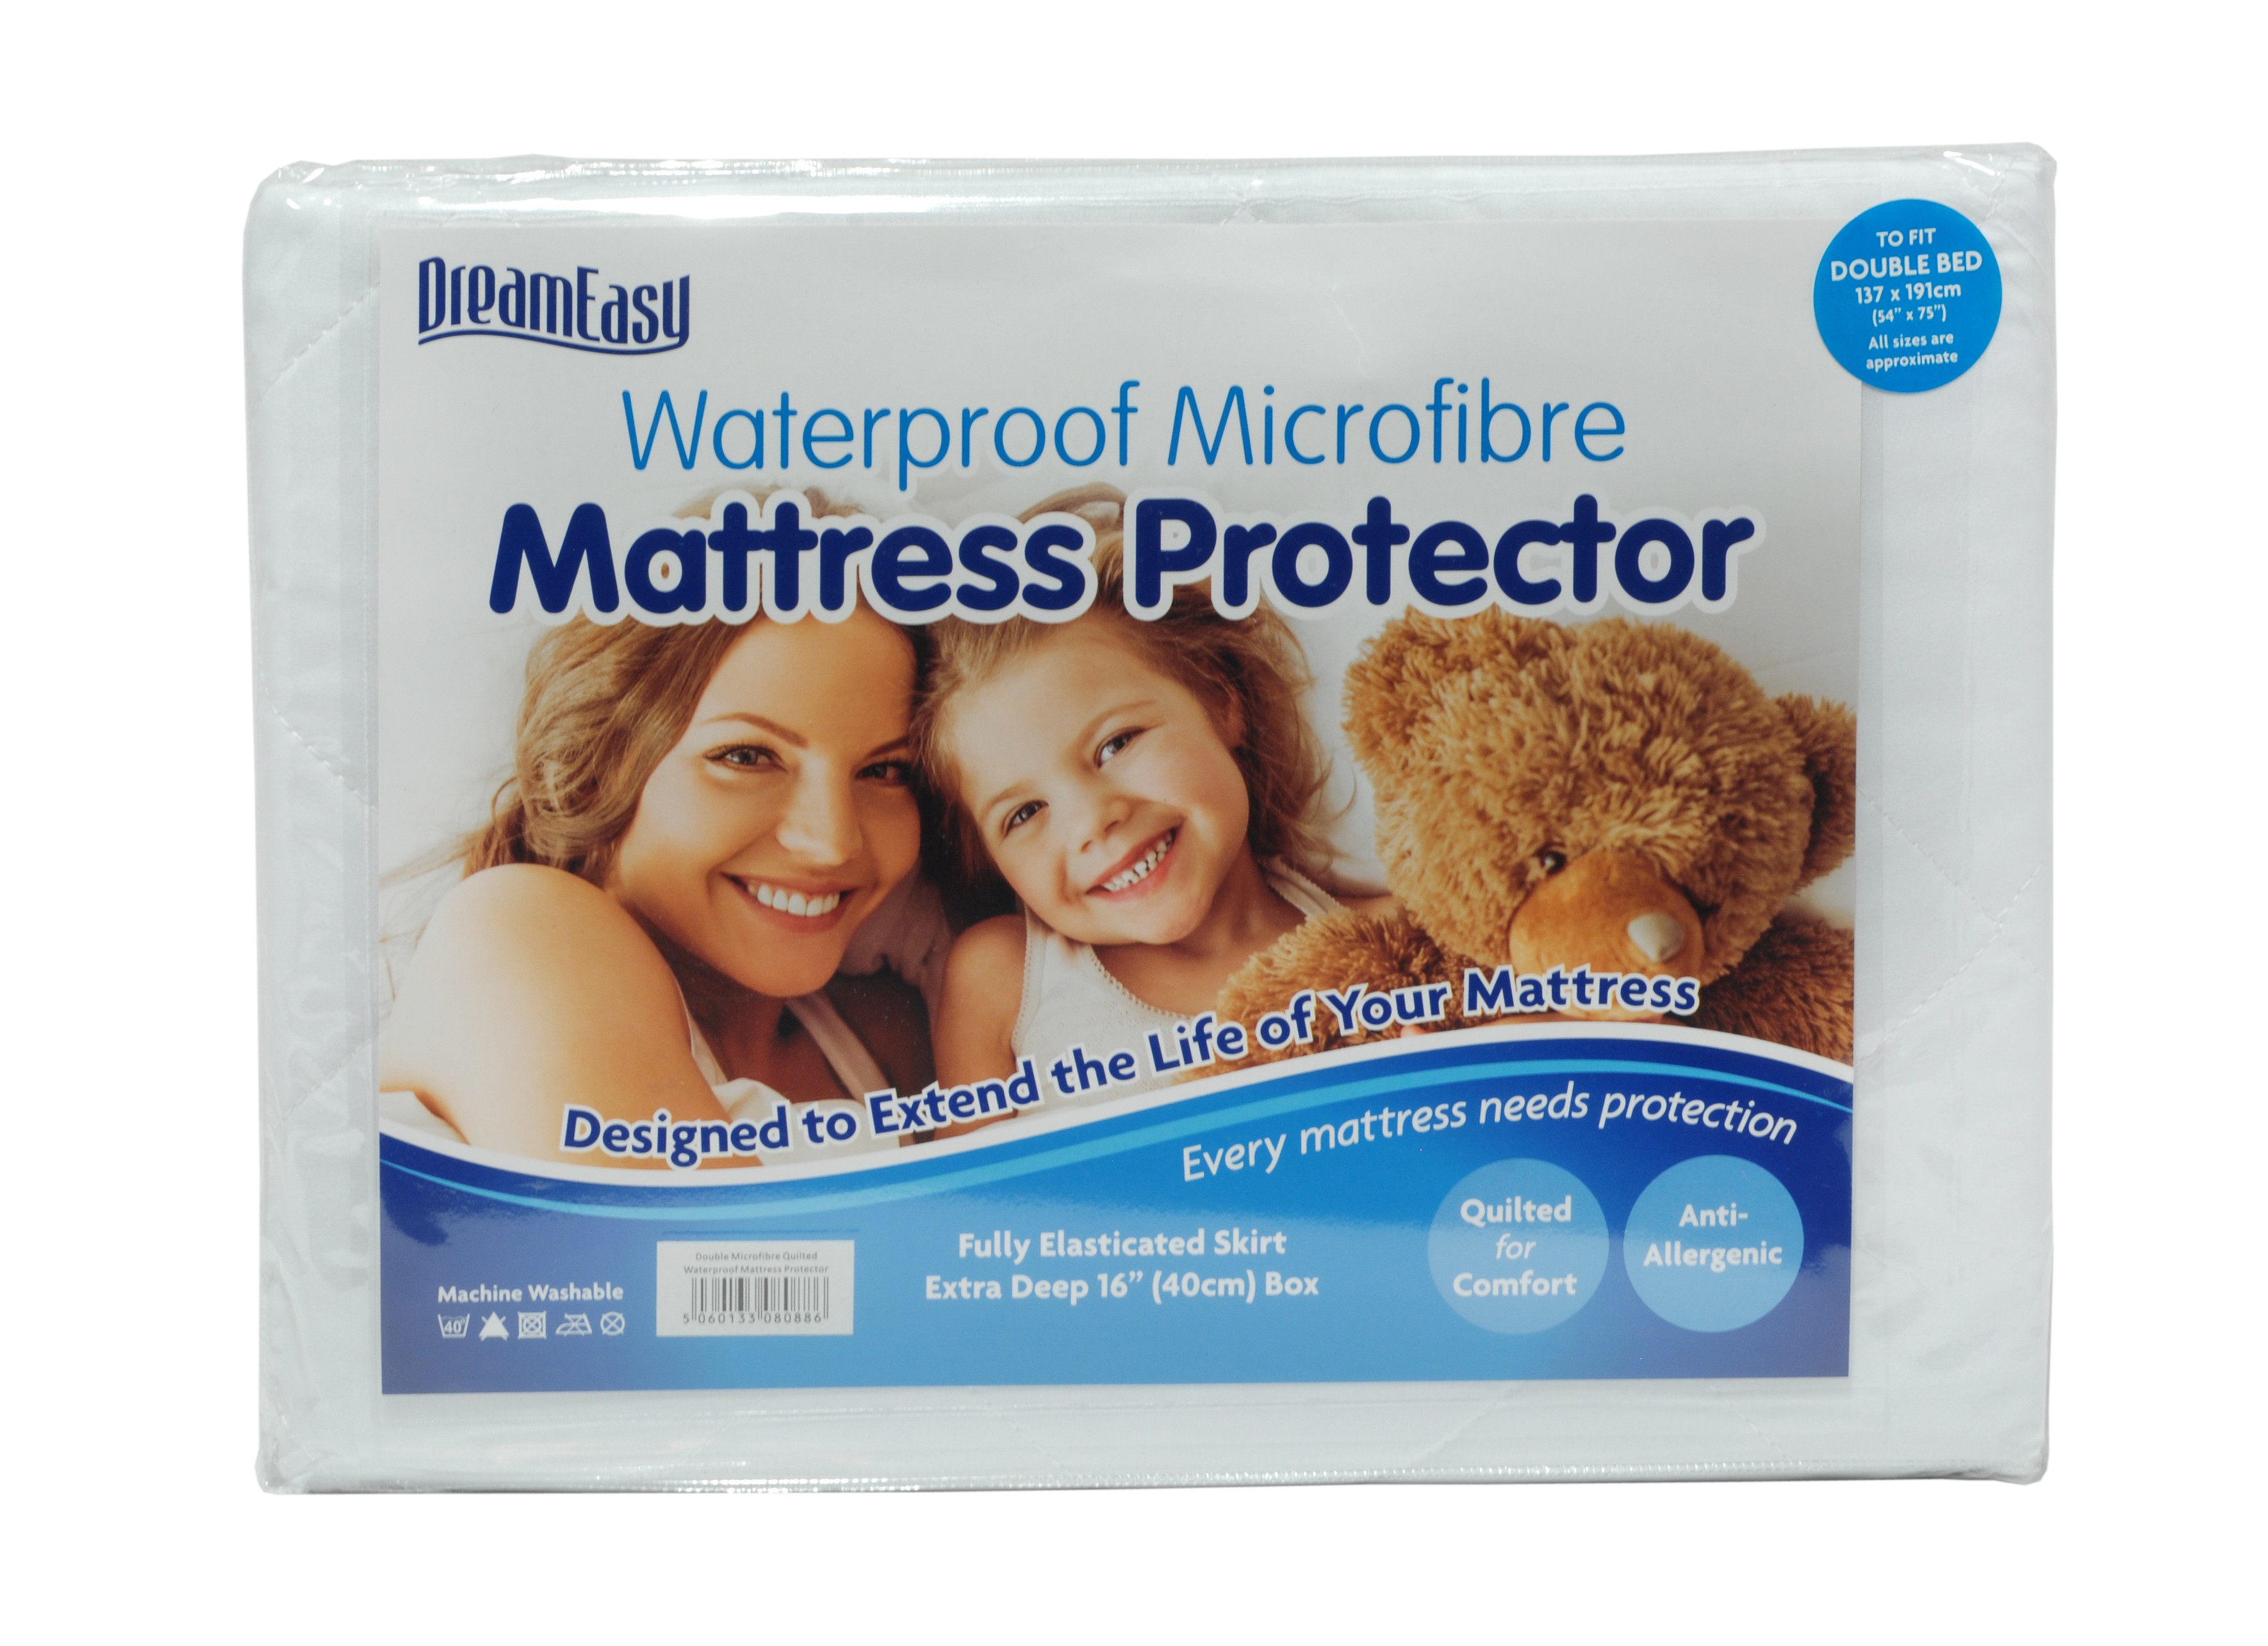 Box of DreamEasy Waterproof Microfibre Mattress Protectors